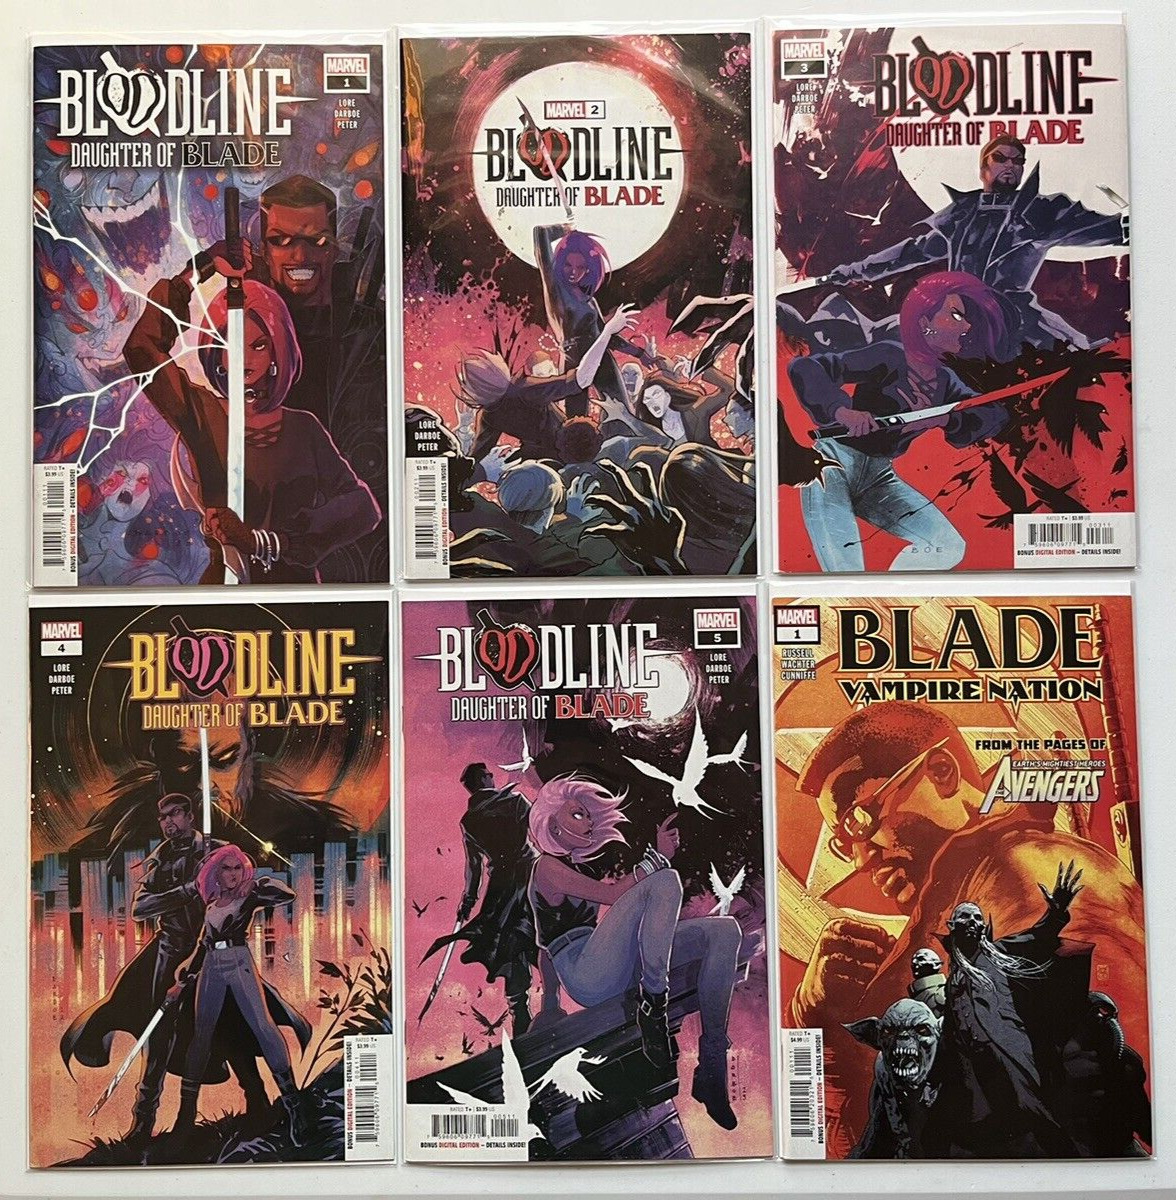 Bloodline Daughter Of Blade 1 2 3 4 5 Complete Set Run / Blade Vampire Nation